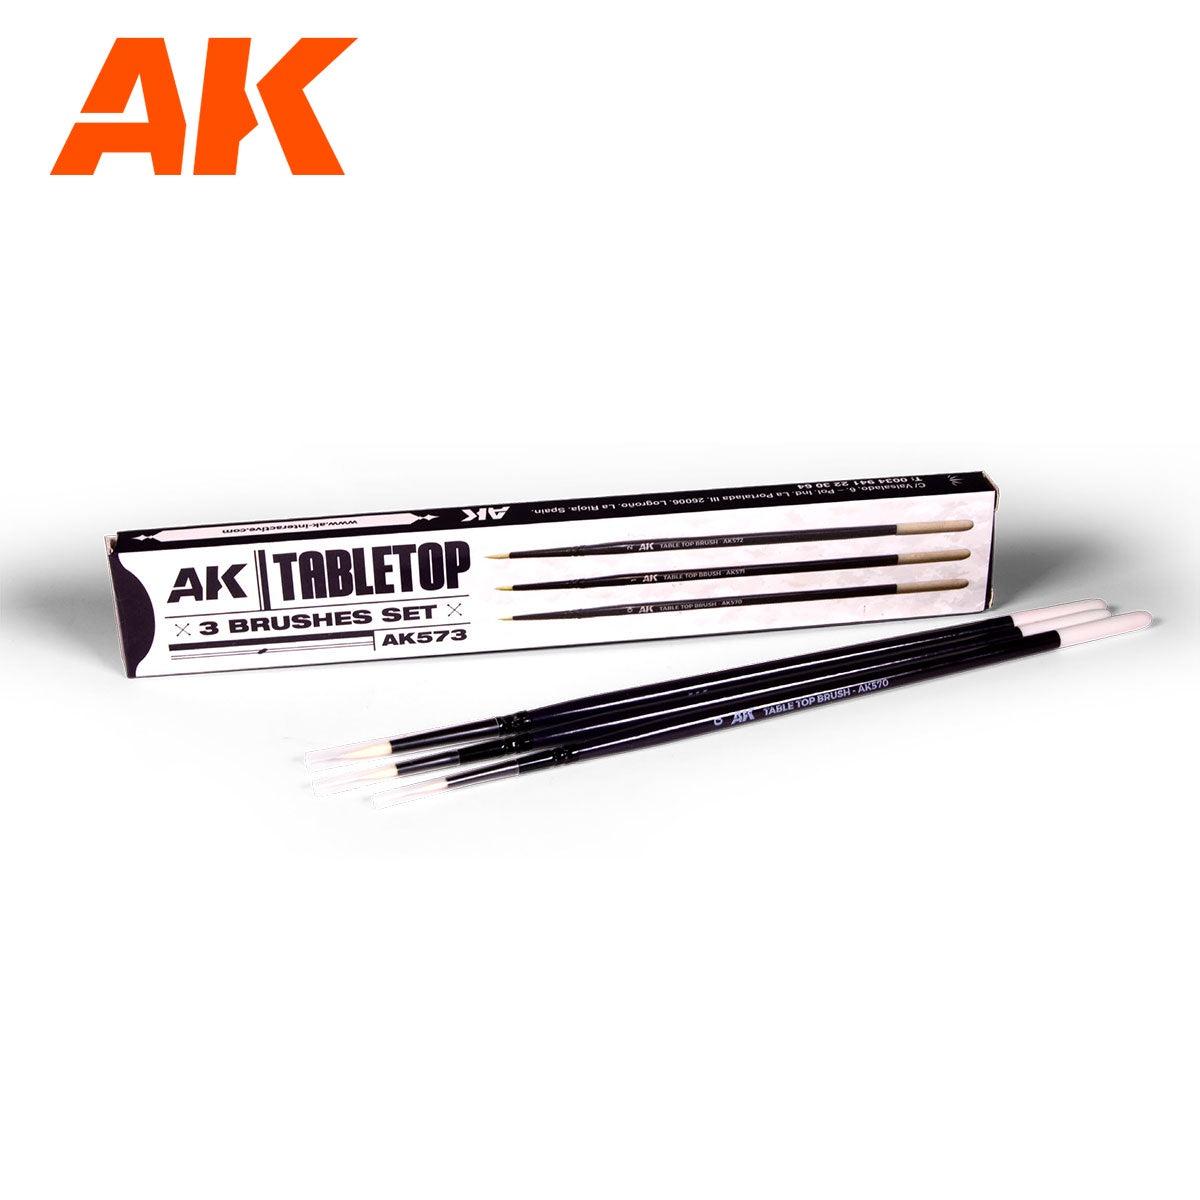 AK Interactive Table Top Brushes Set 0, 1, 2 AK-573